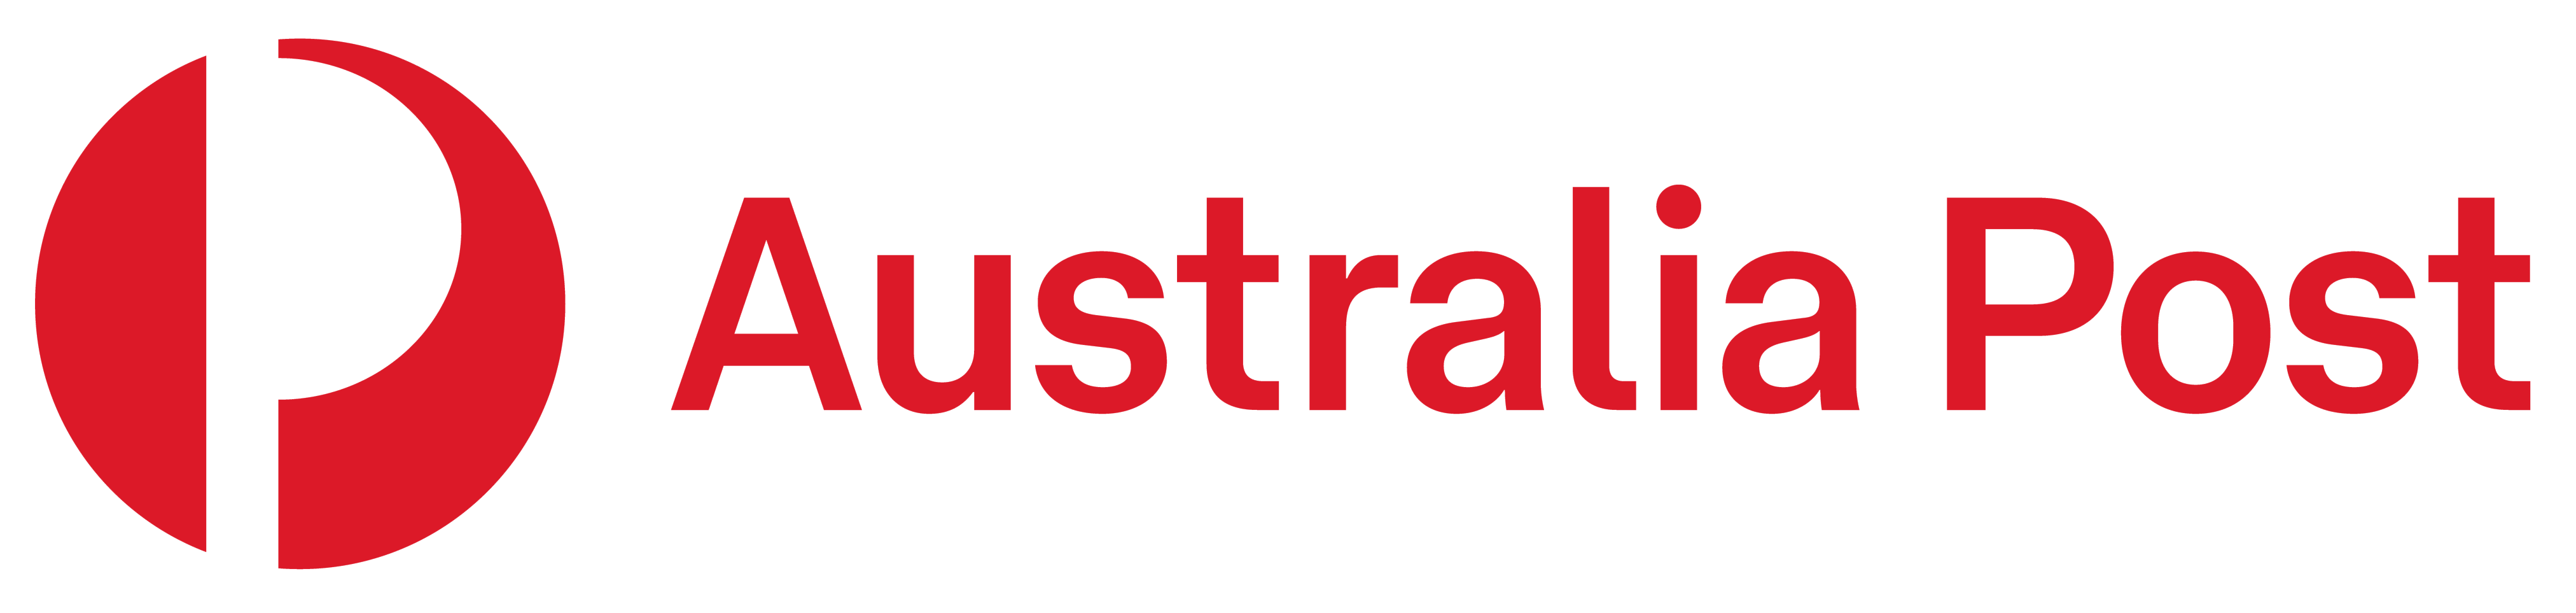 Australia Post logo at LanguageLoop